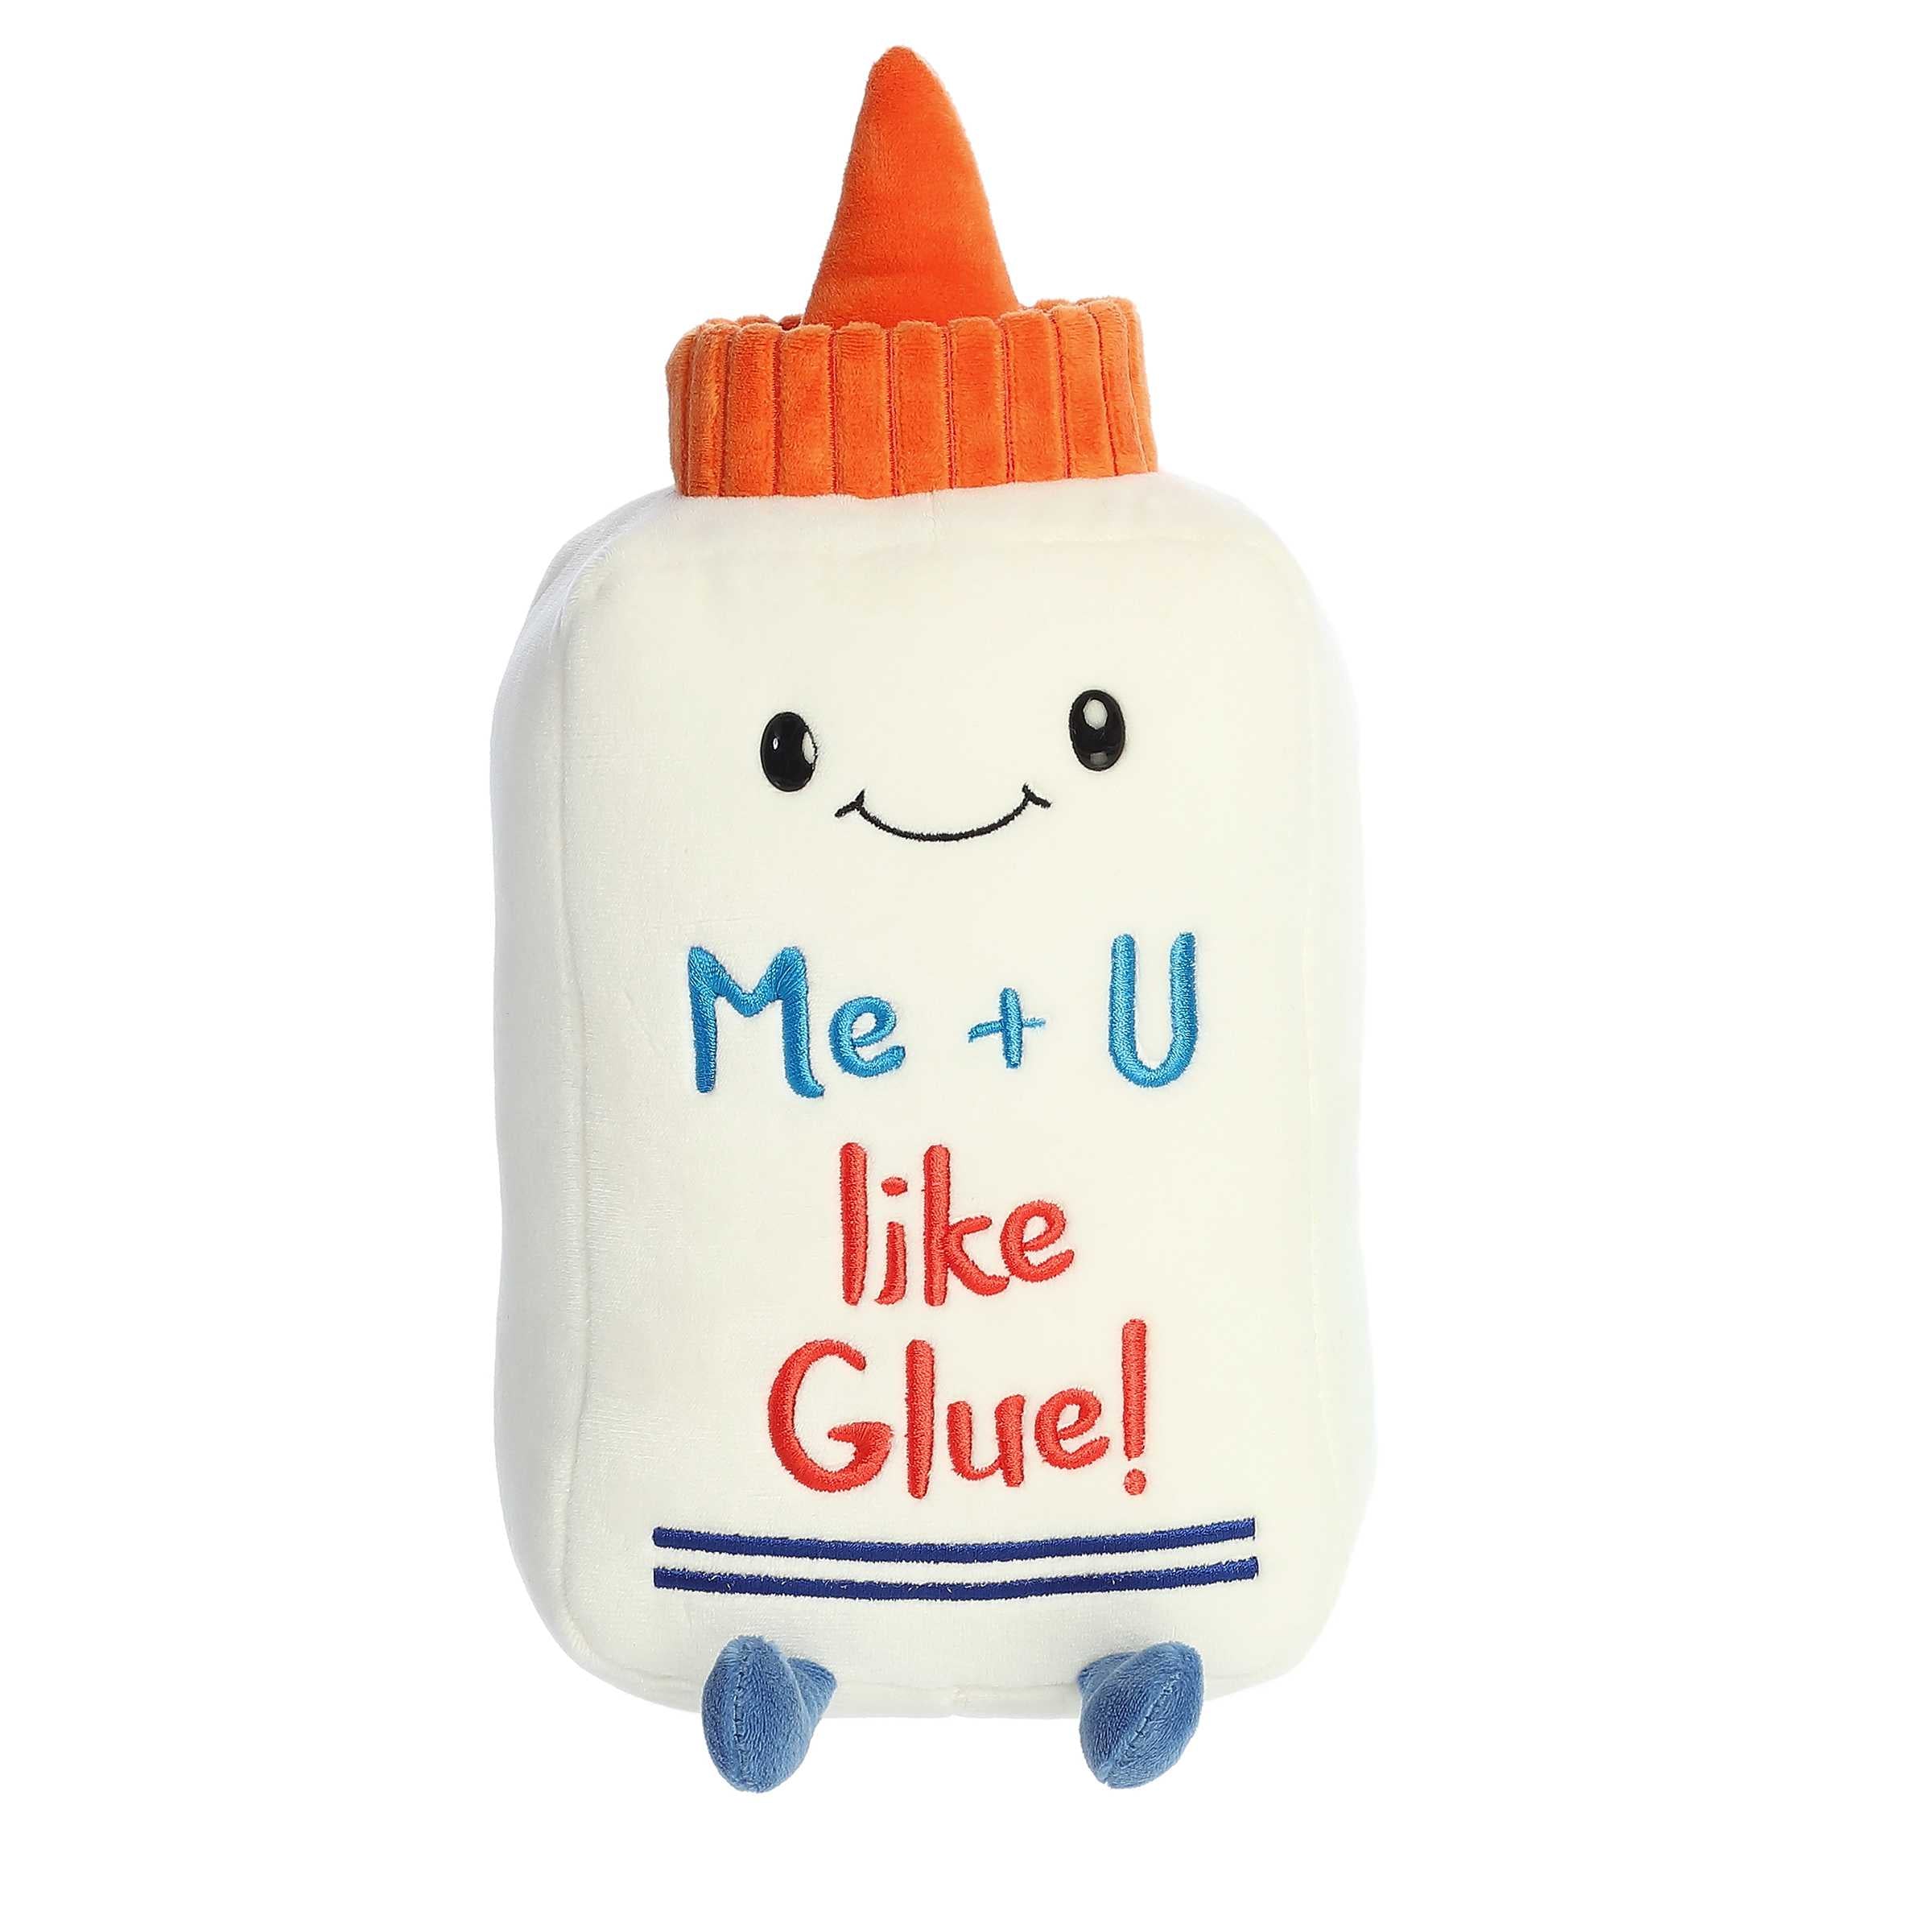 Cute glue shaped plush with a white body, orange cap details, "Me+U Like Glue" pun written across and a smiling face design